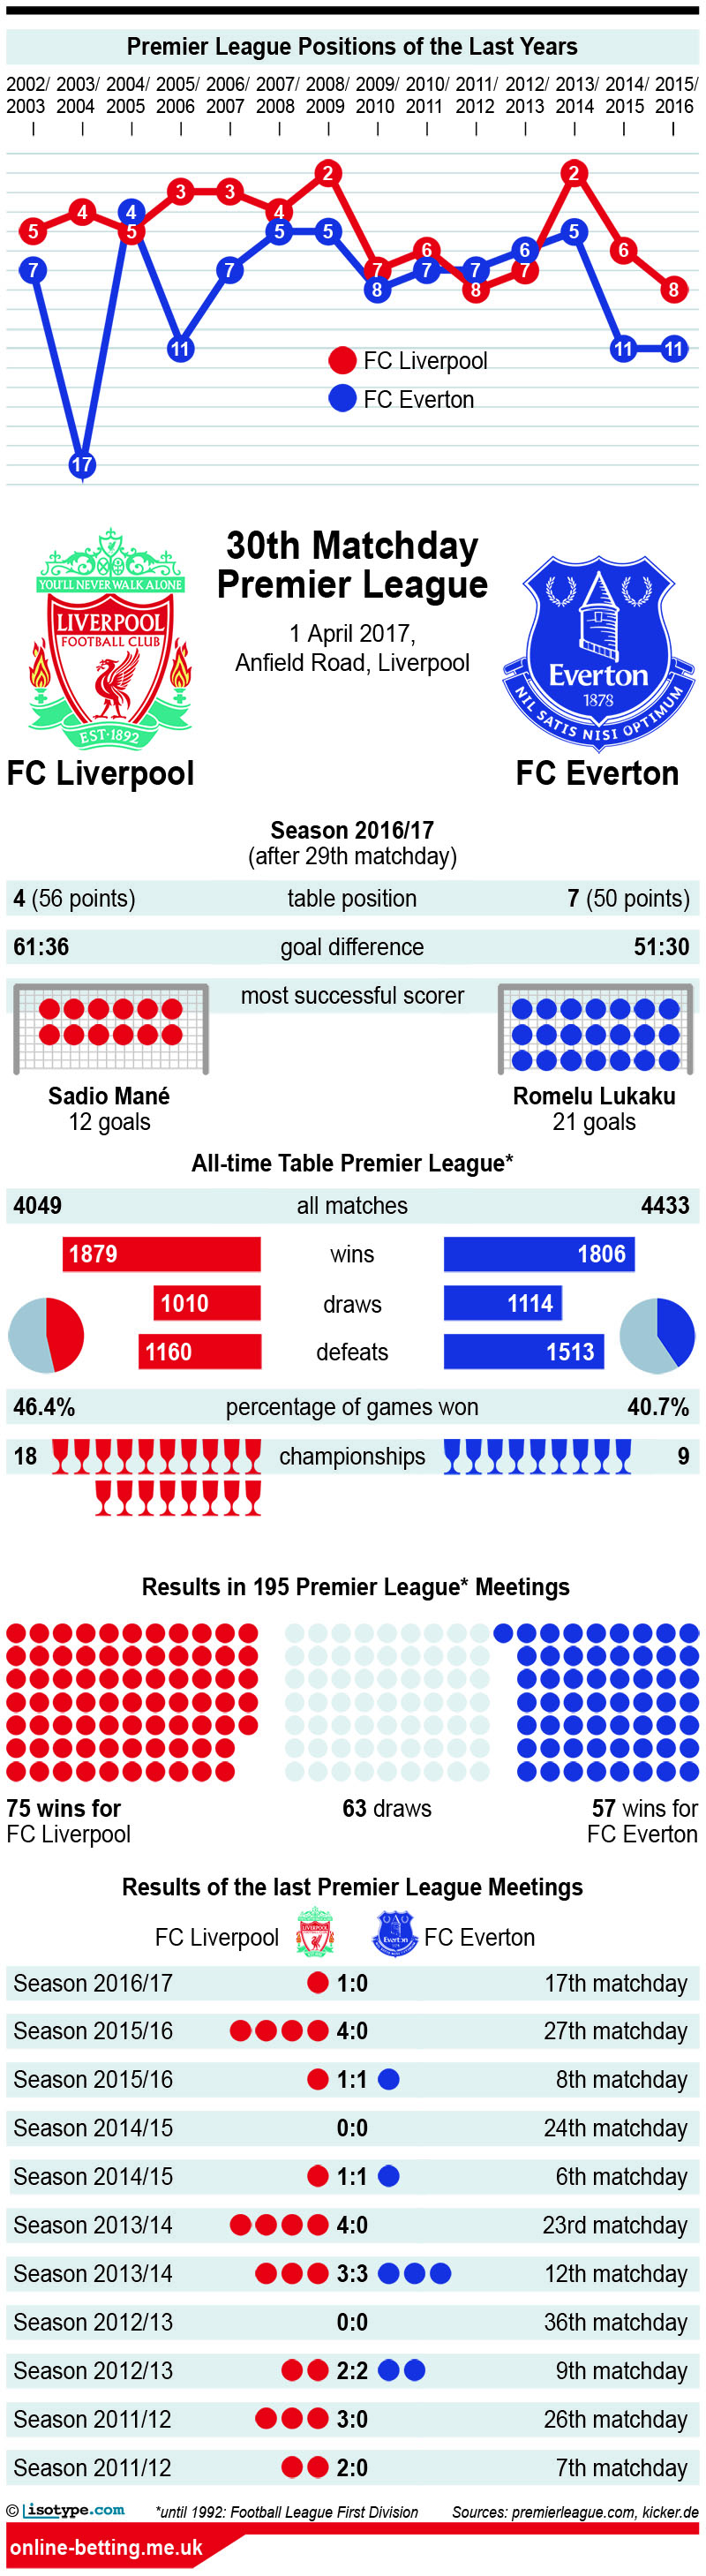 Liverpool v Everton 2017 Infographic